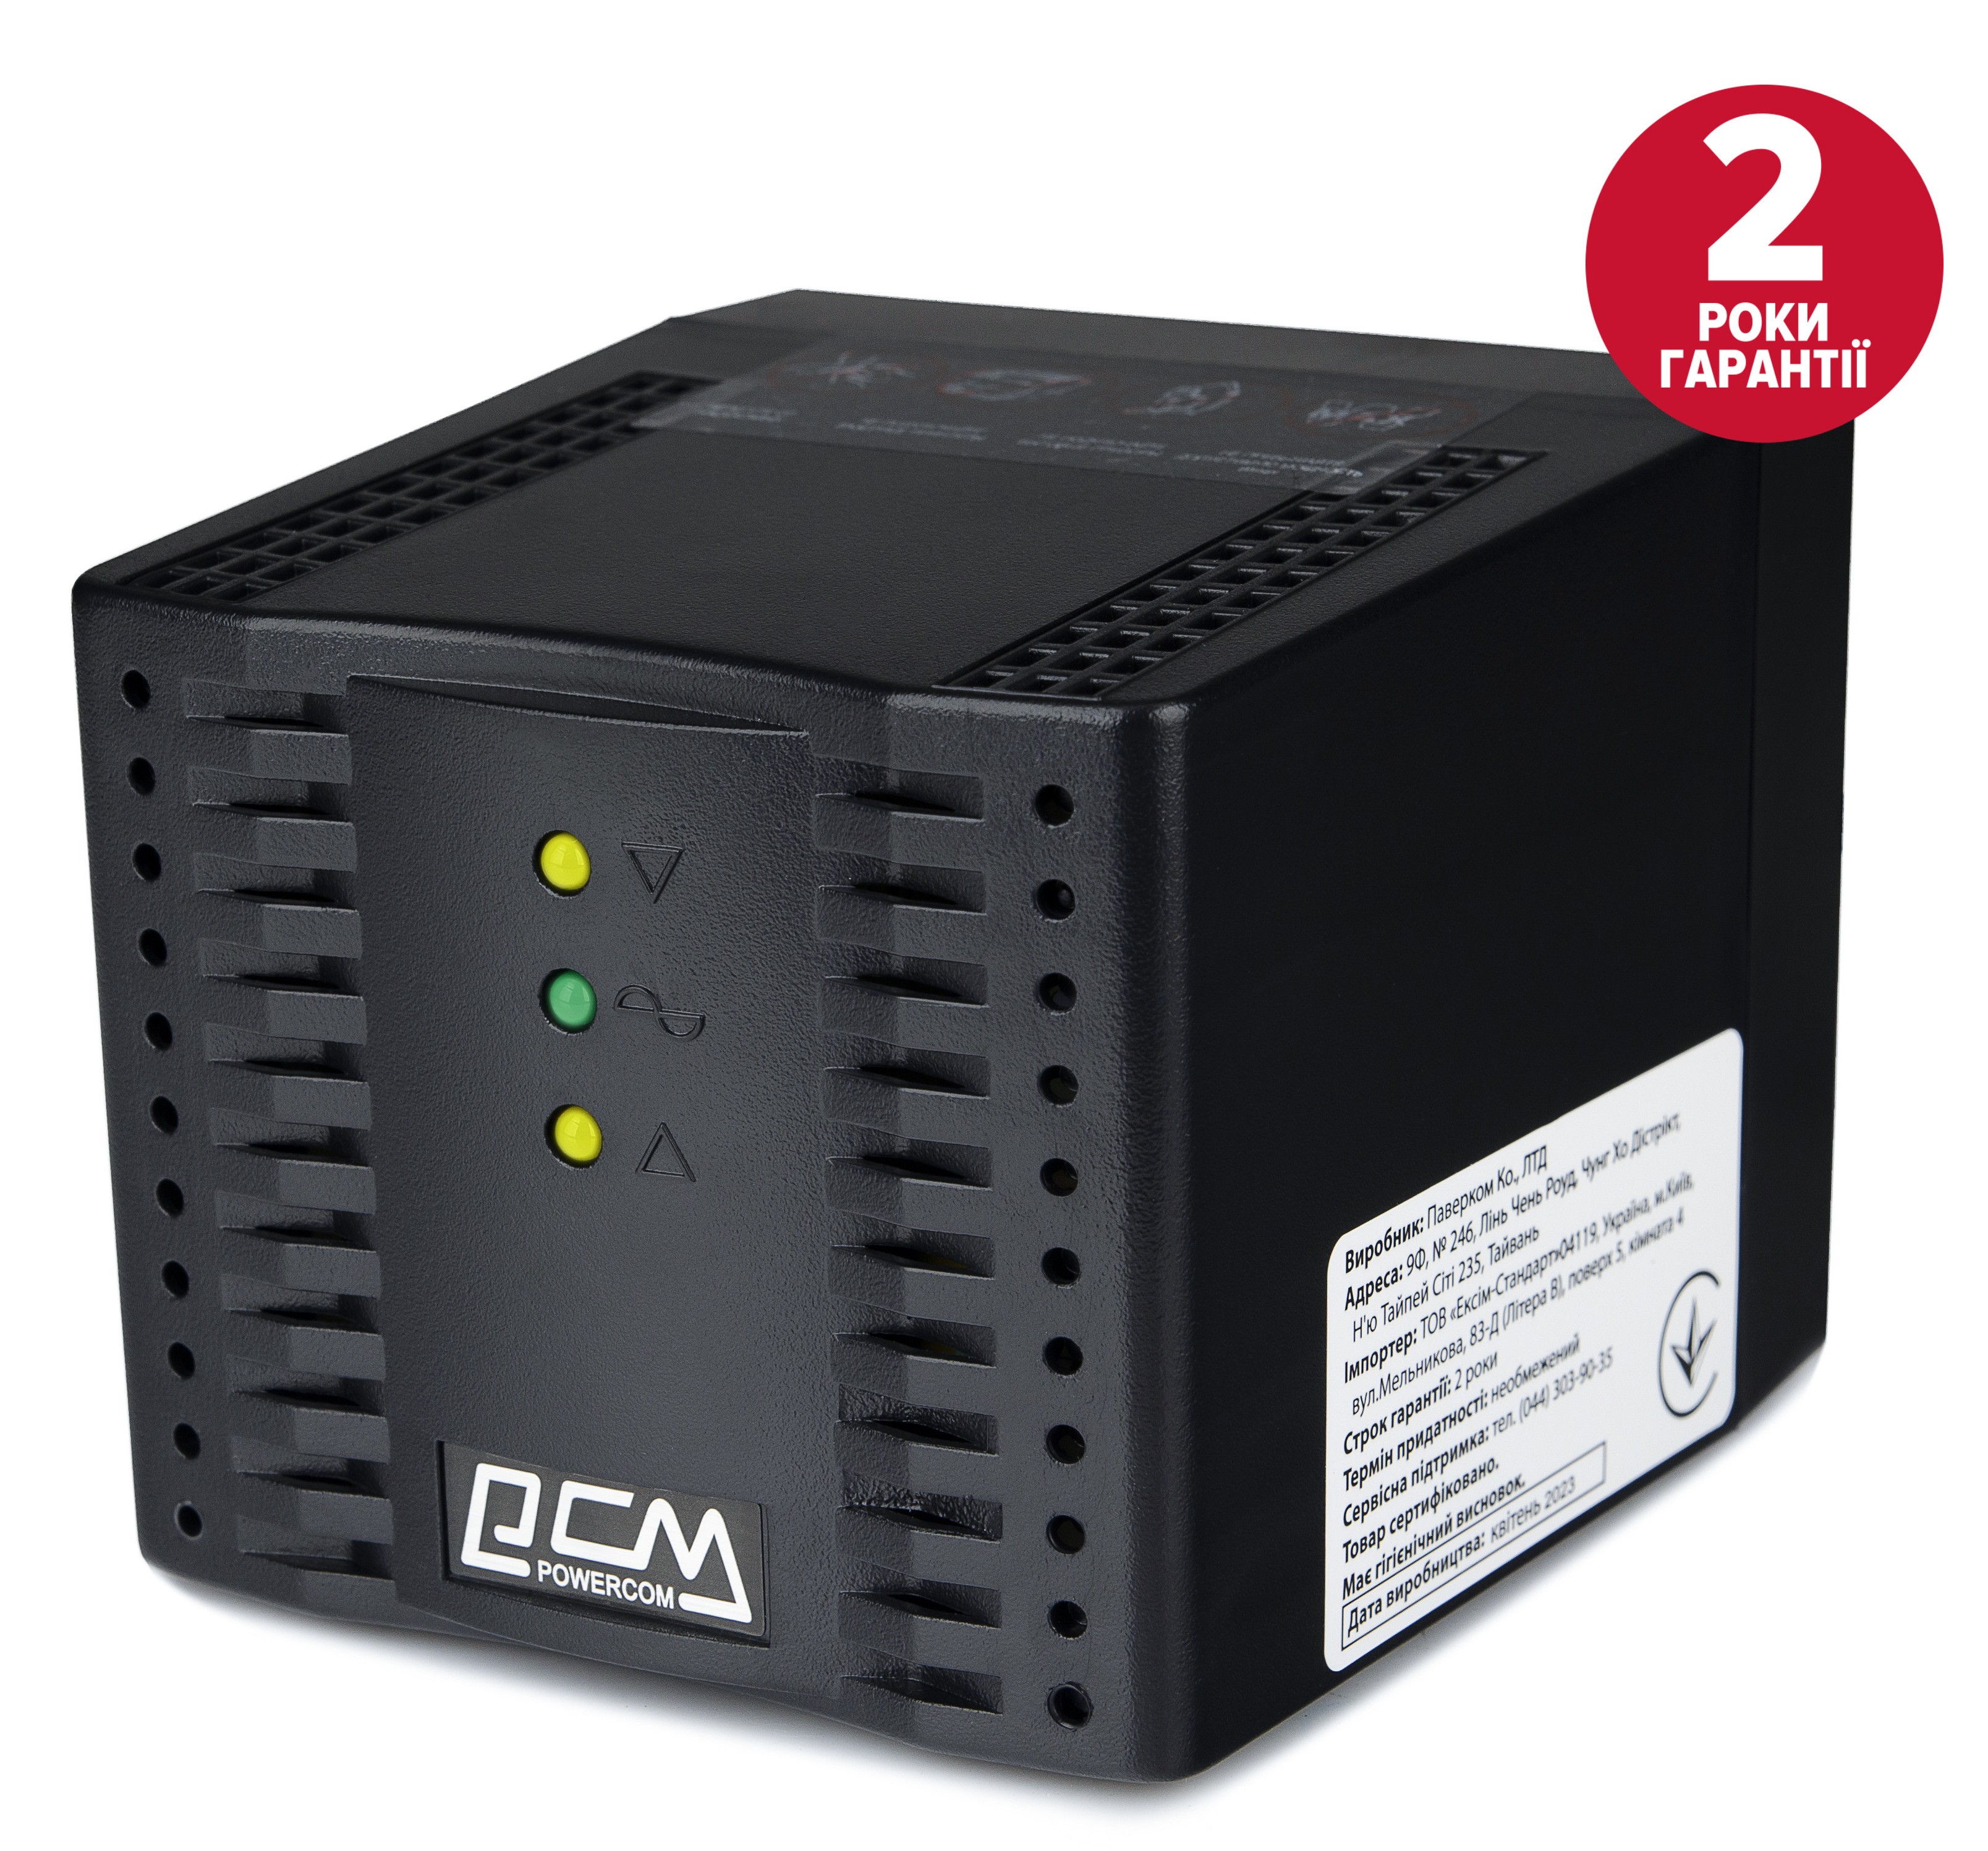 Стабилизатор напряжения Powercom TCA-600 black цена 975.00 грн - фотография 2